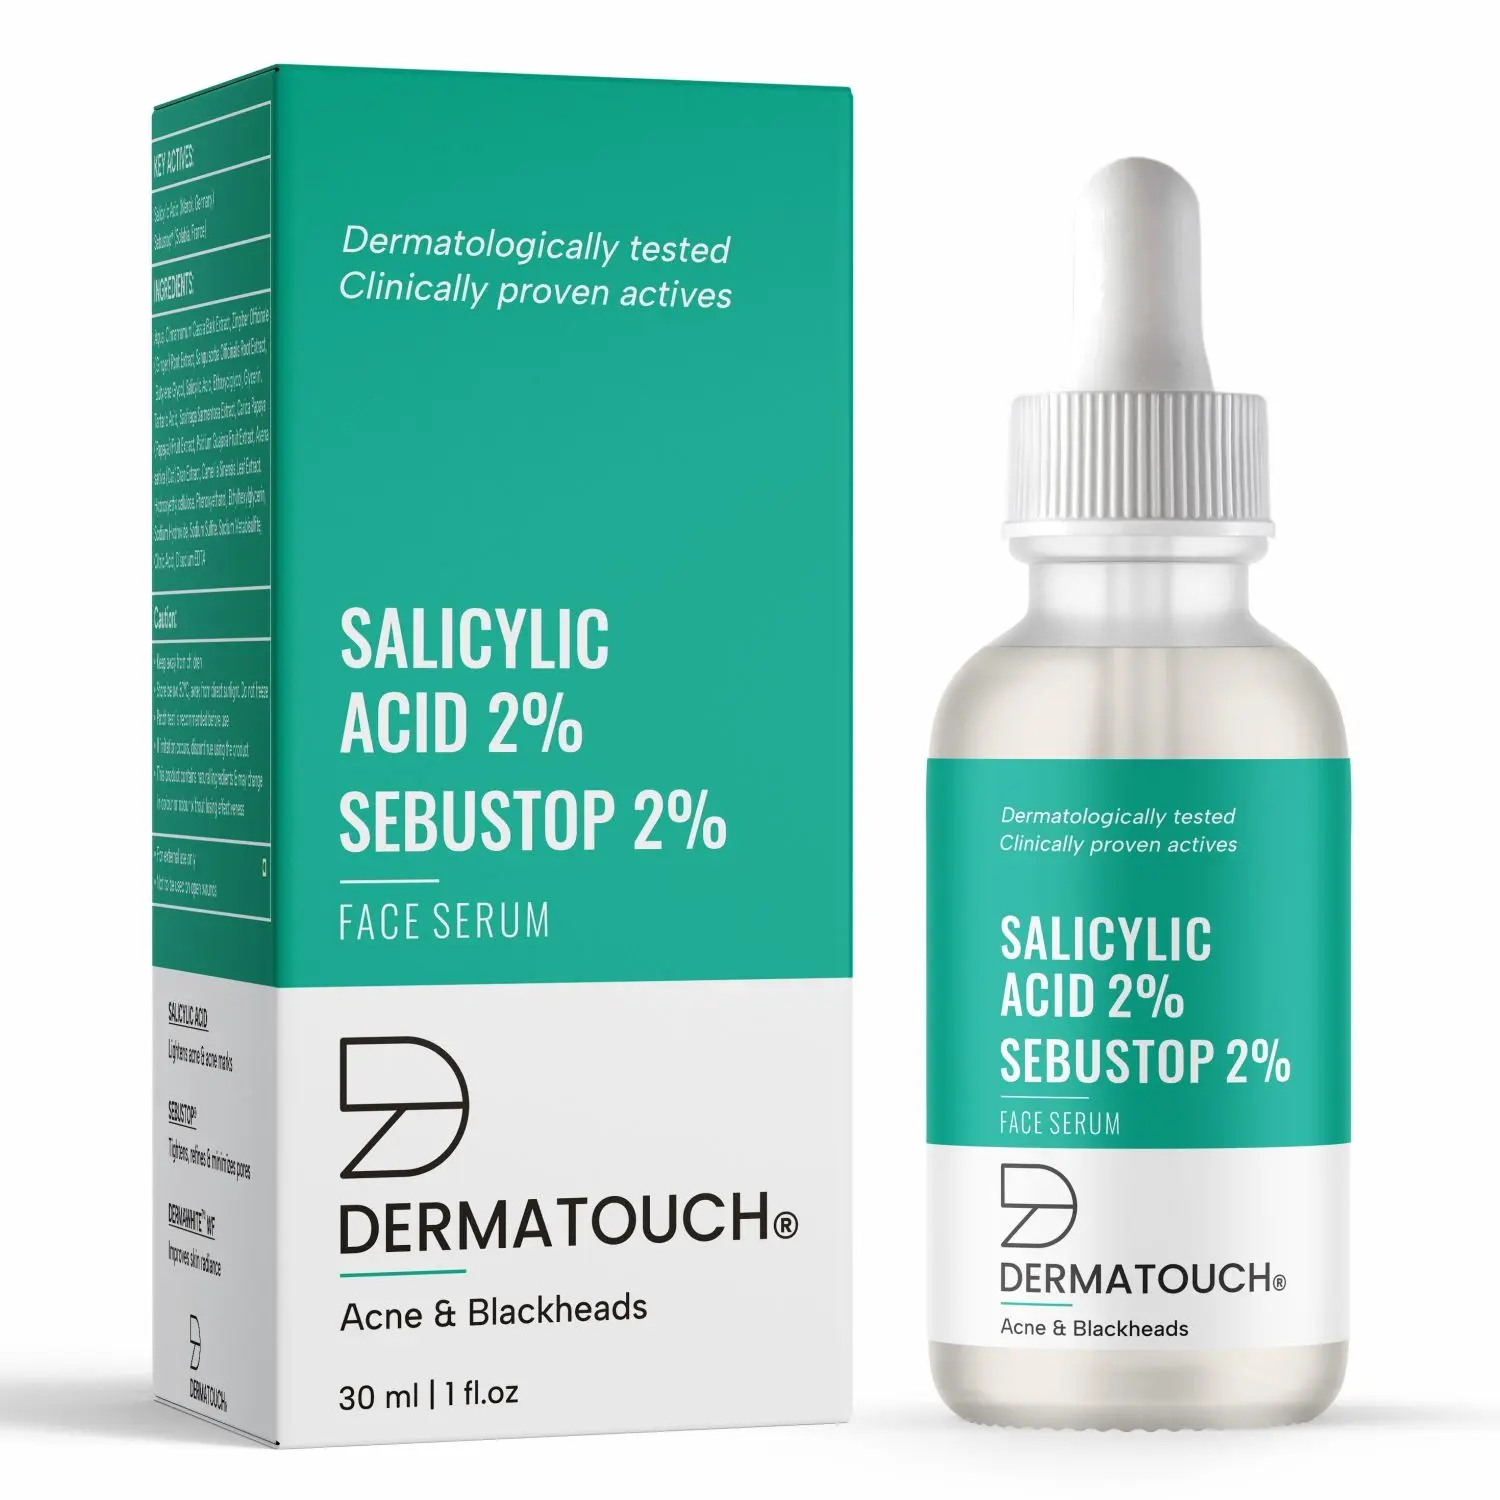 DERMATOUCH Salicylic Acid 2% Sebustop 2% Face Serum | For Acne & Blackheads | 30ml